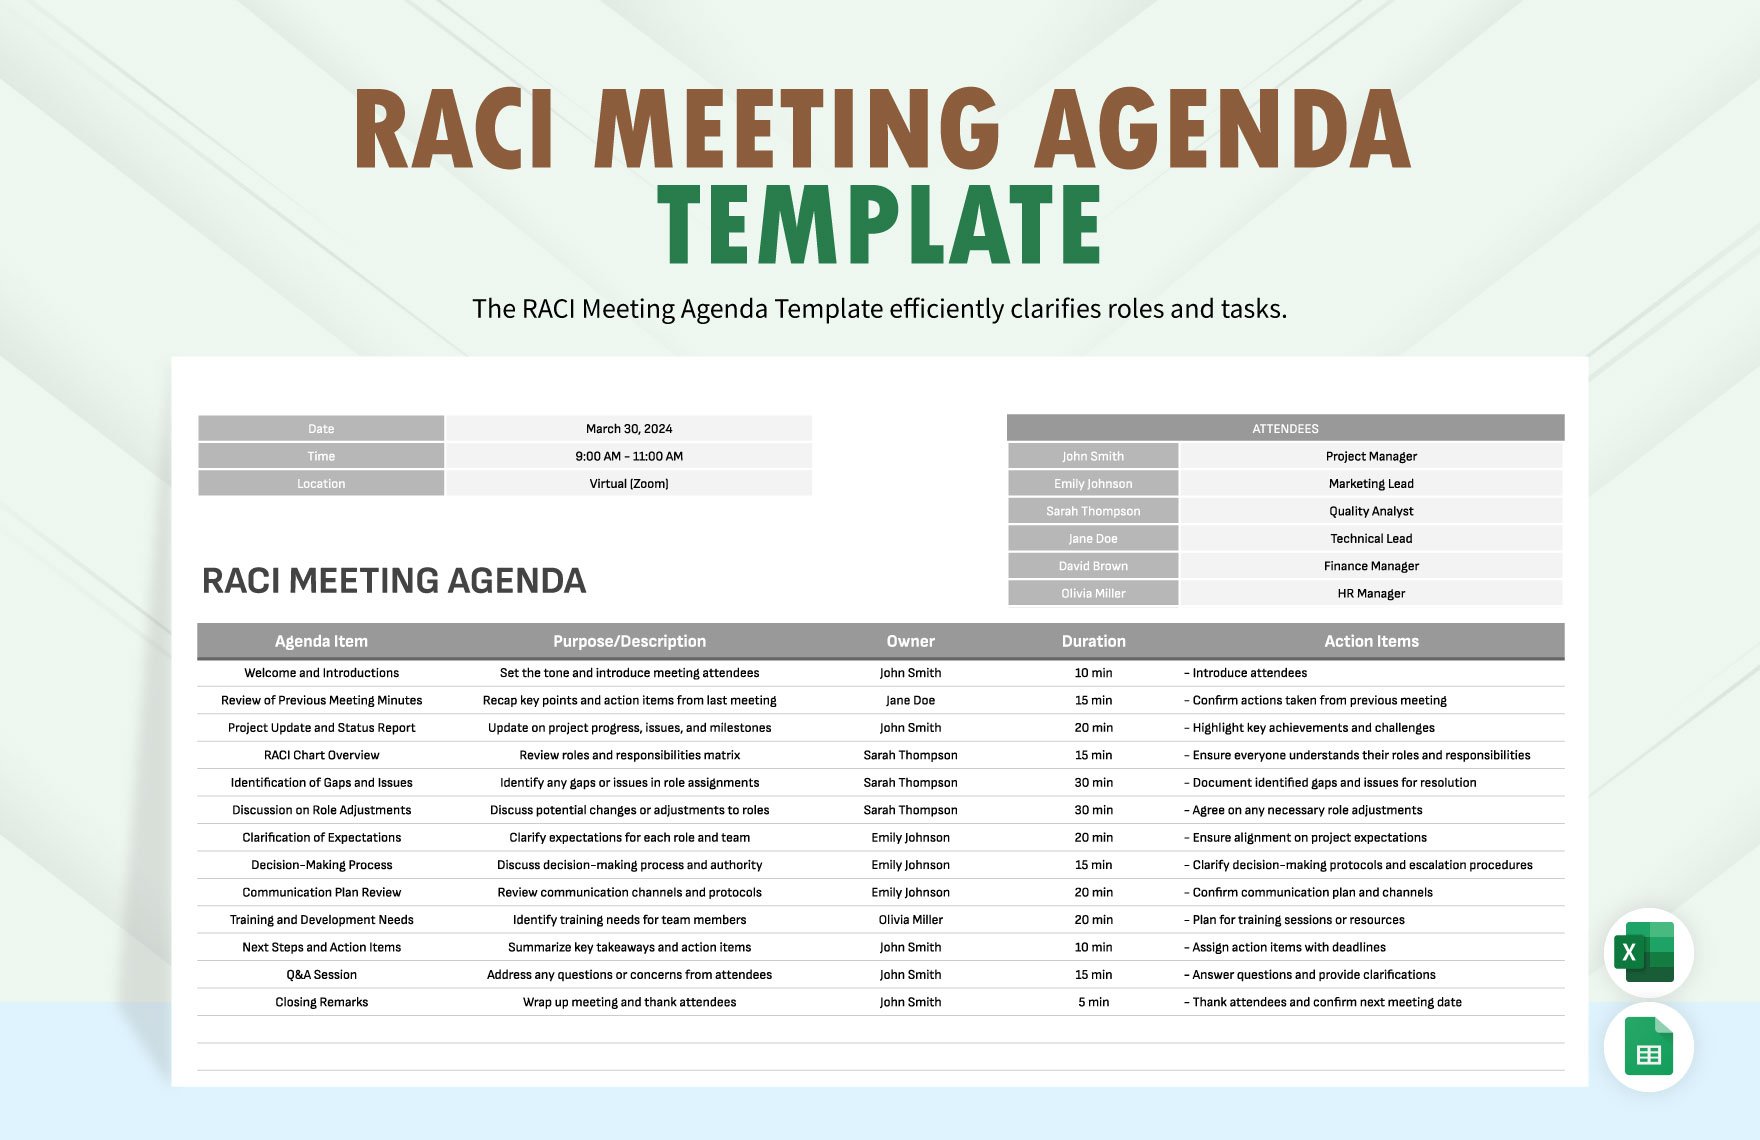 RACI Meeting Agenda Template